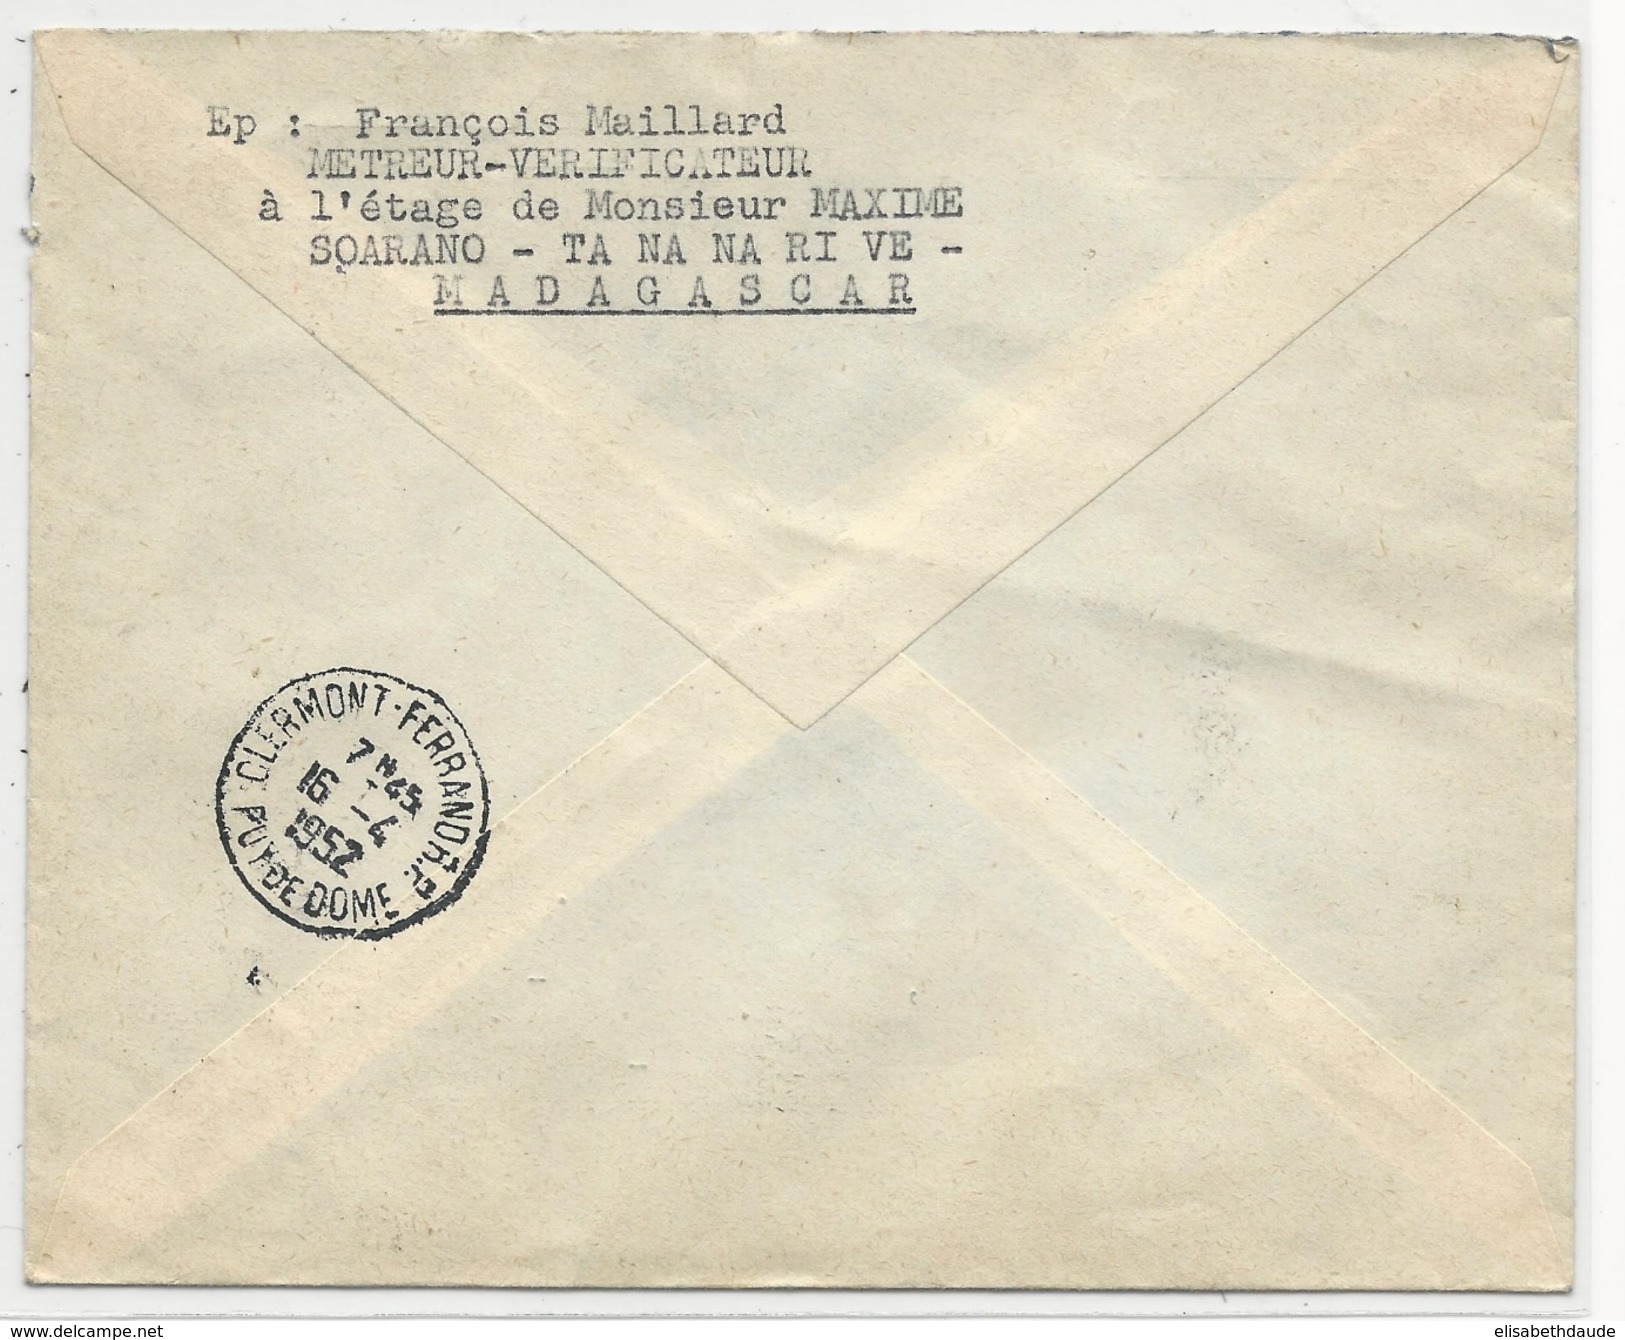 MADAGASCAR - 1952 - ENVELOPPE Par AVION RECOMMANDEE  De TANANARIVE TSARALALANA Pour CLERMONT - Storia Postale